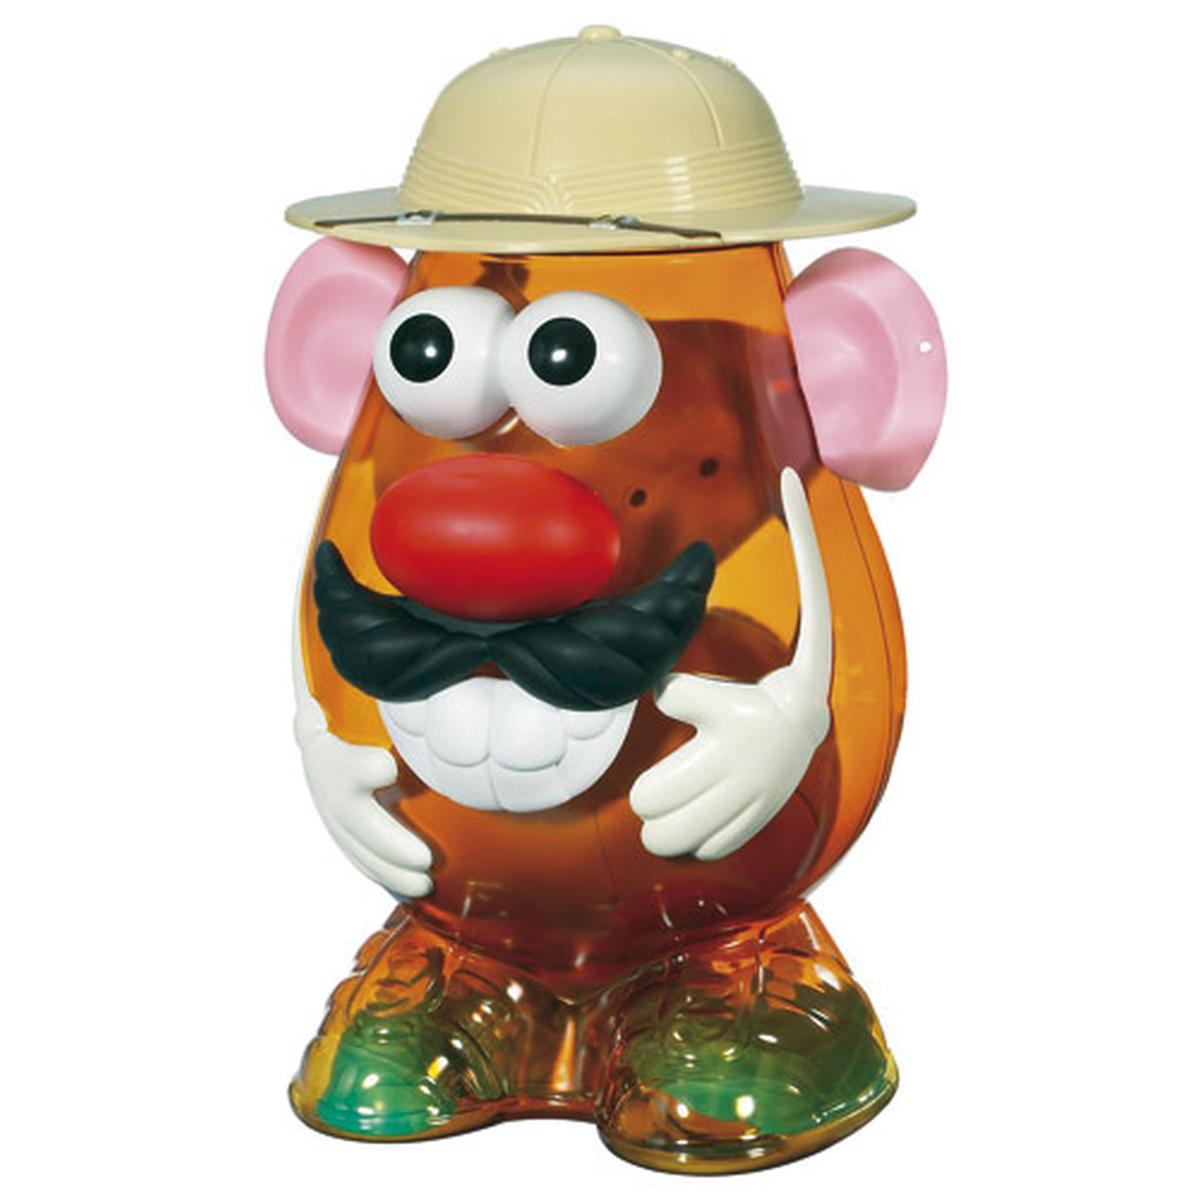 Playskool - Mr. Potato Safari | Playskool | Toys"R"Us España